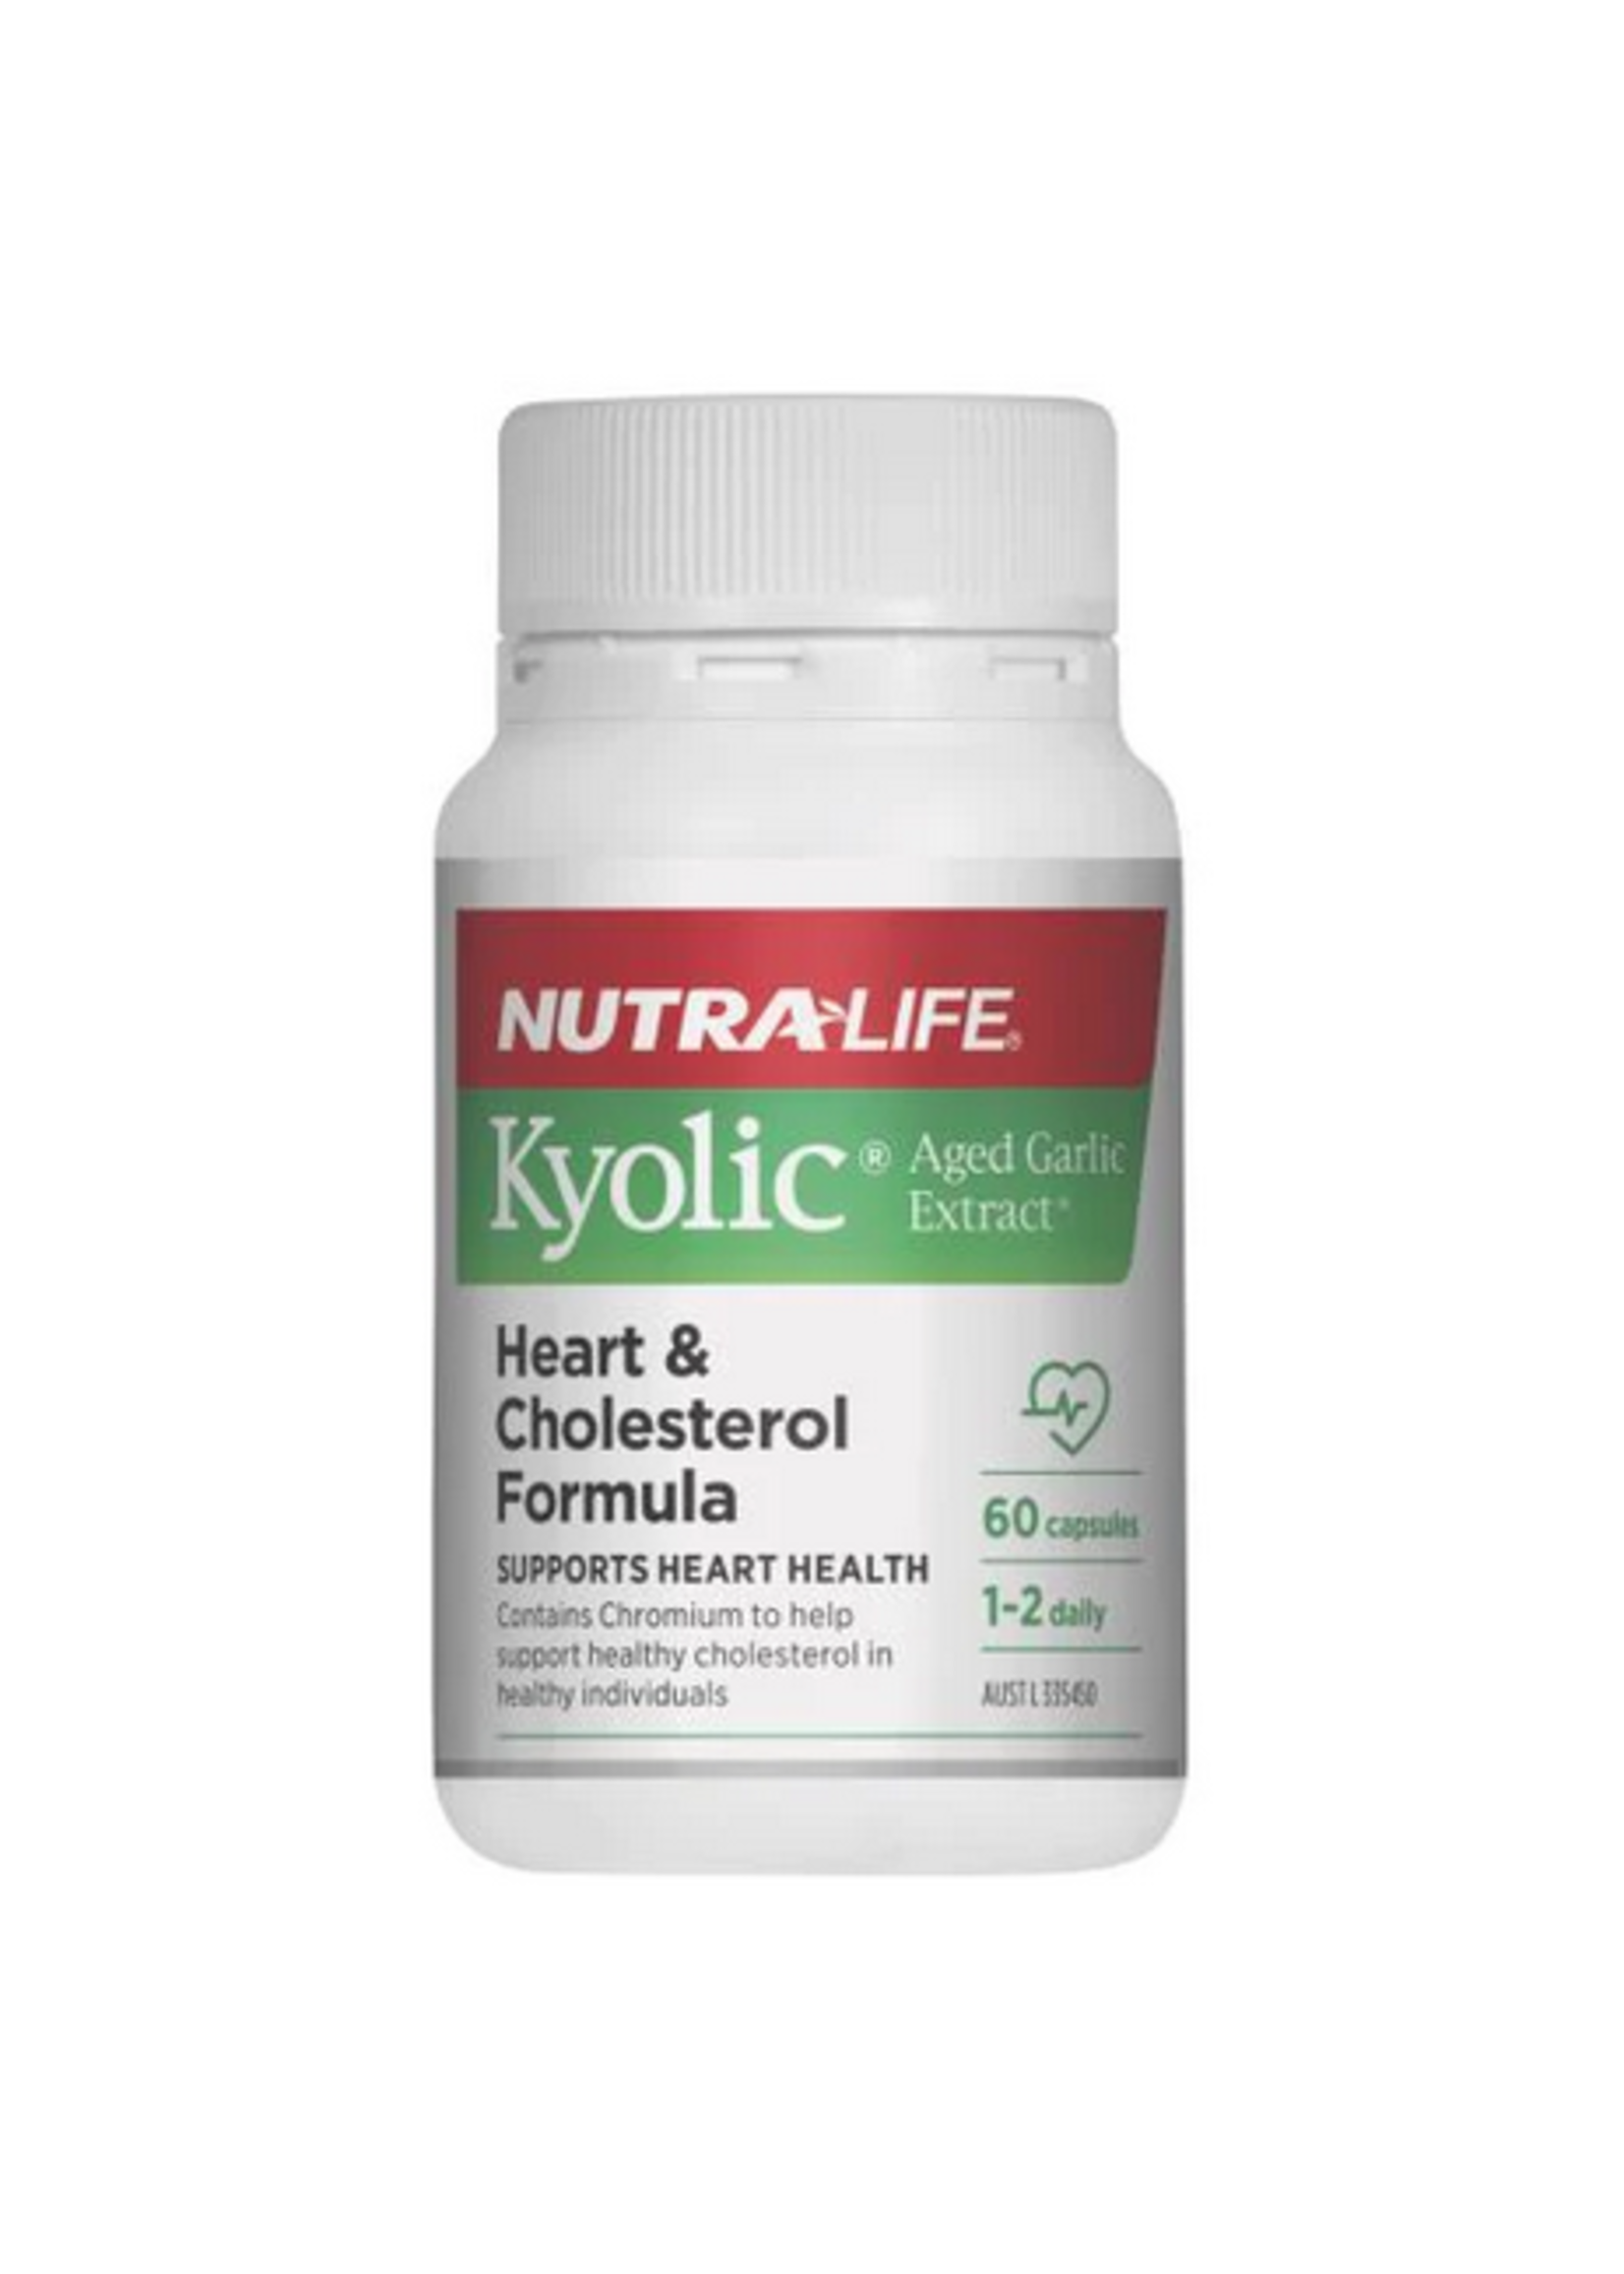 NutraLife Nutralife Kyolic Aged Garlic Extract Heart & Cholesterol Formula 60 caps